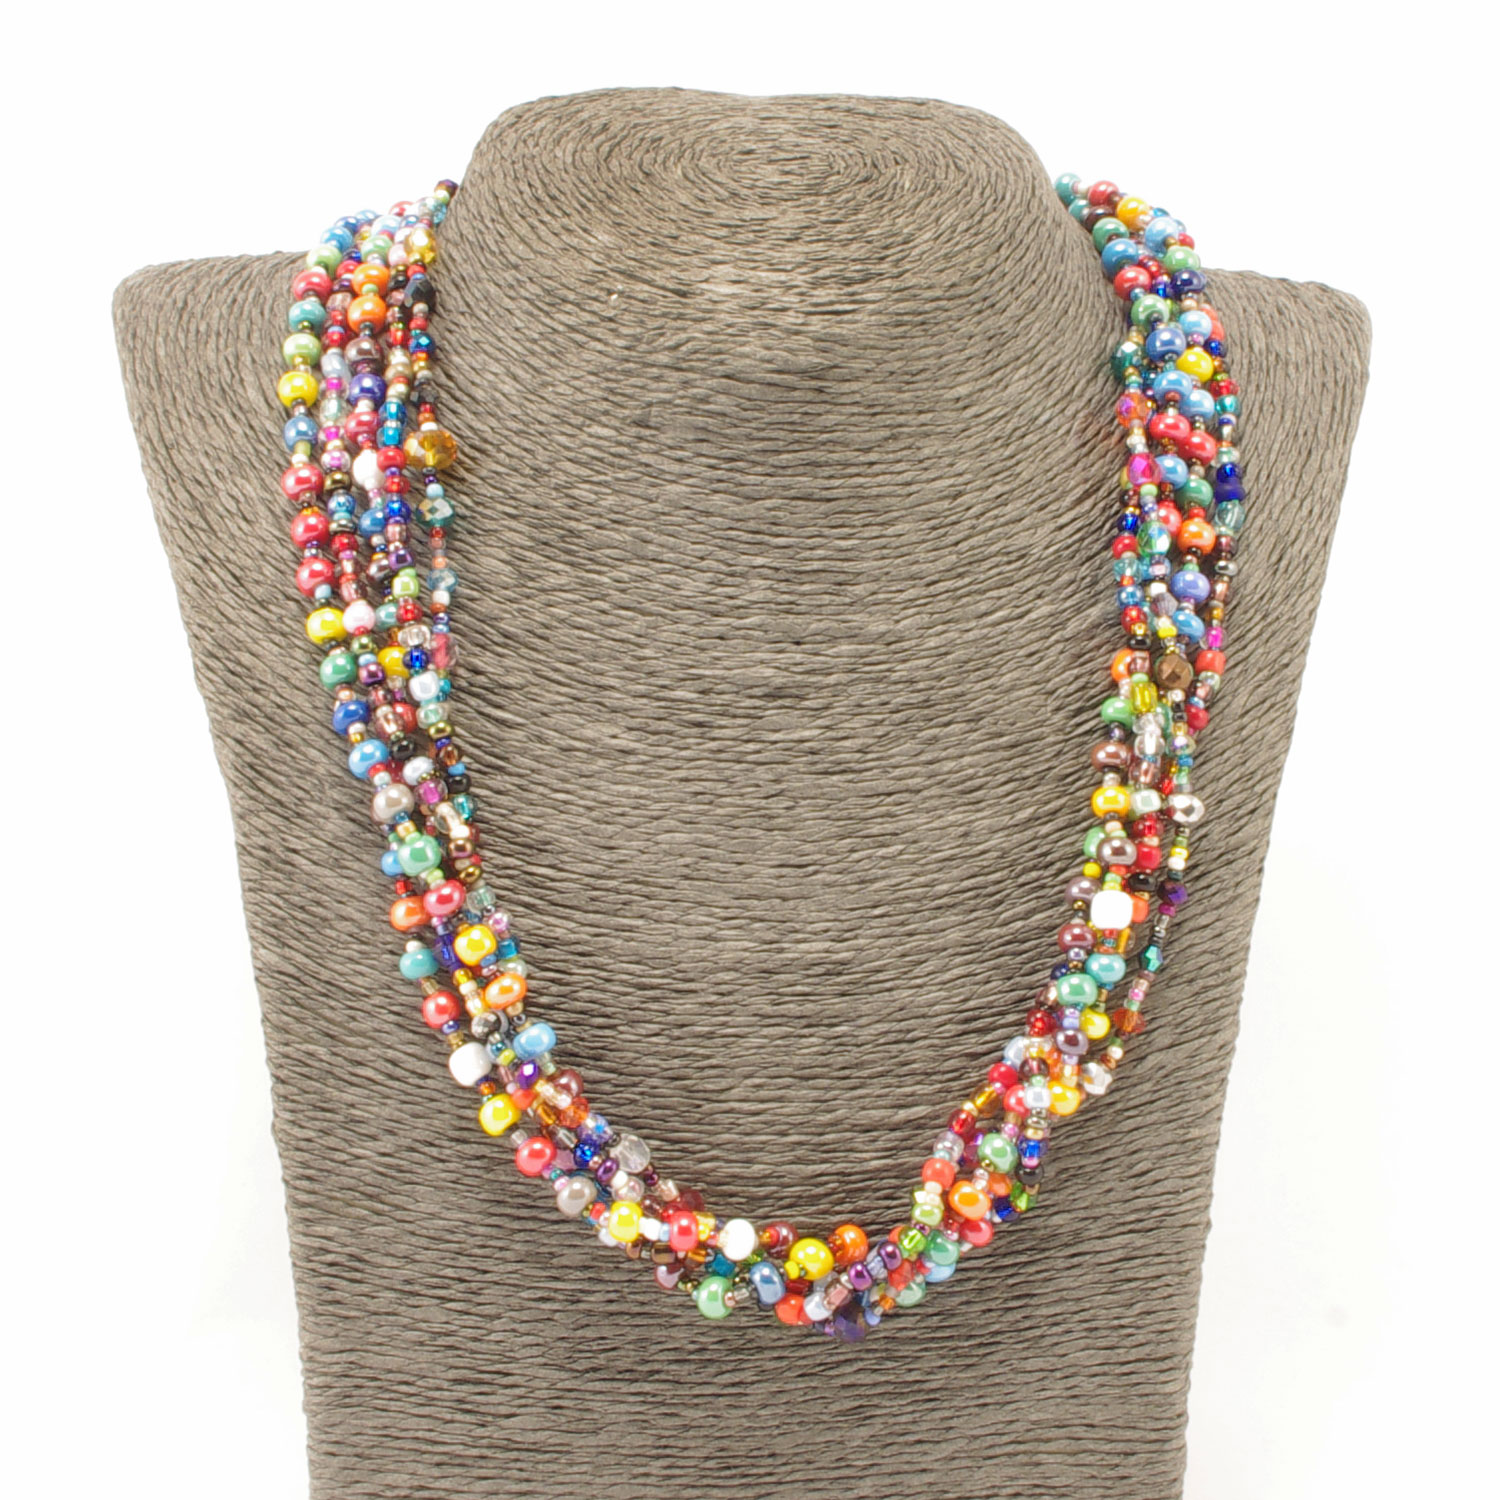 Gumball Necklace - Jewelry - Handmade Guatemalan Imports